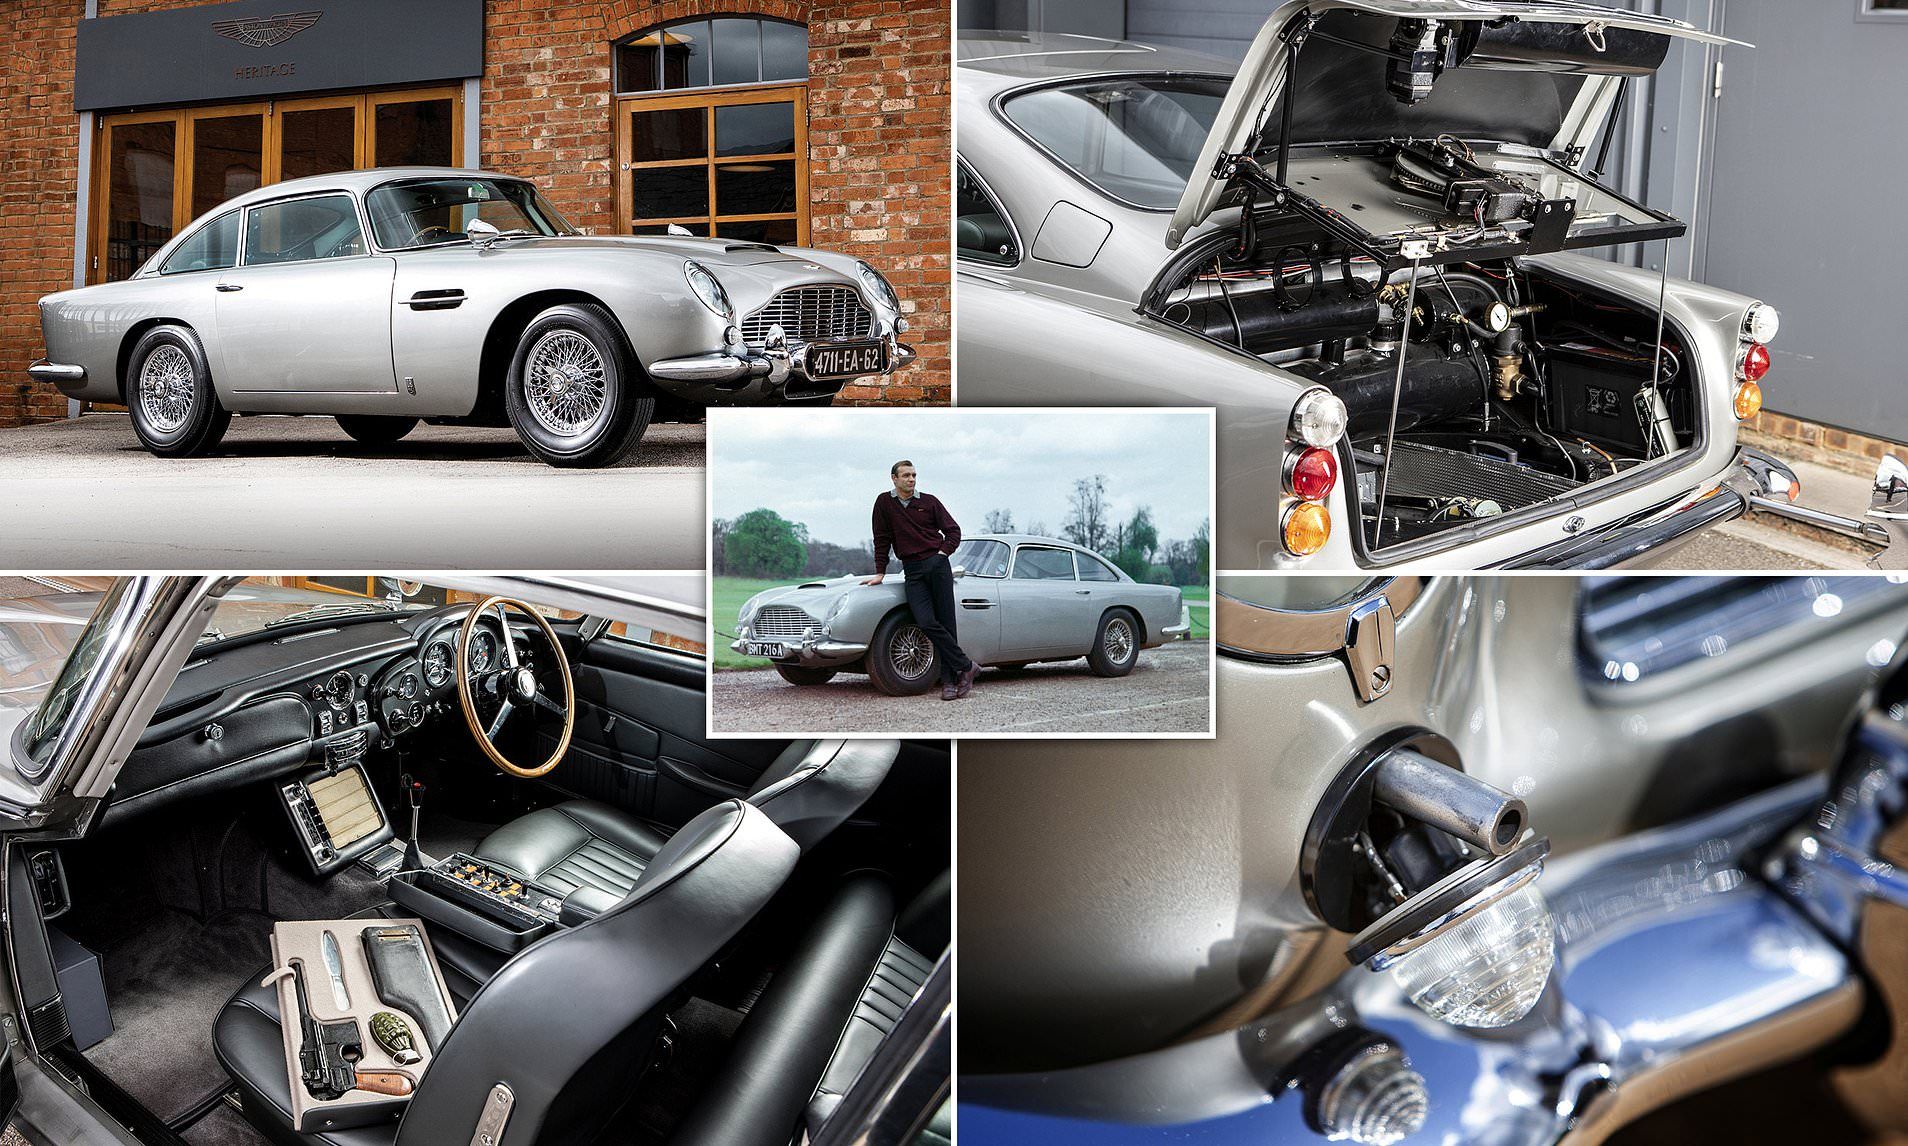 James Bond Aston Martin DB5 with its gadgets